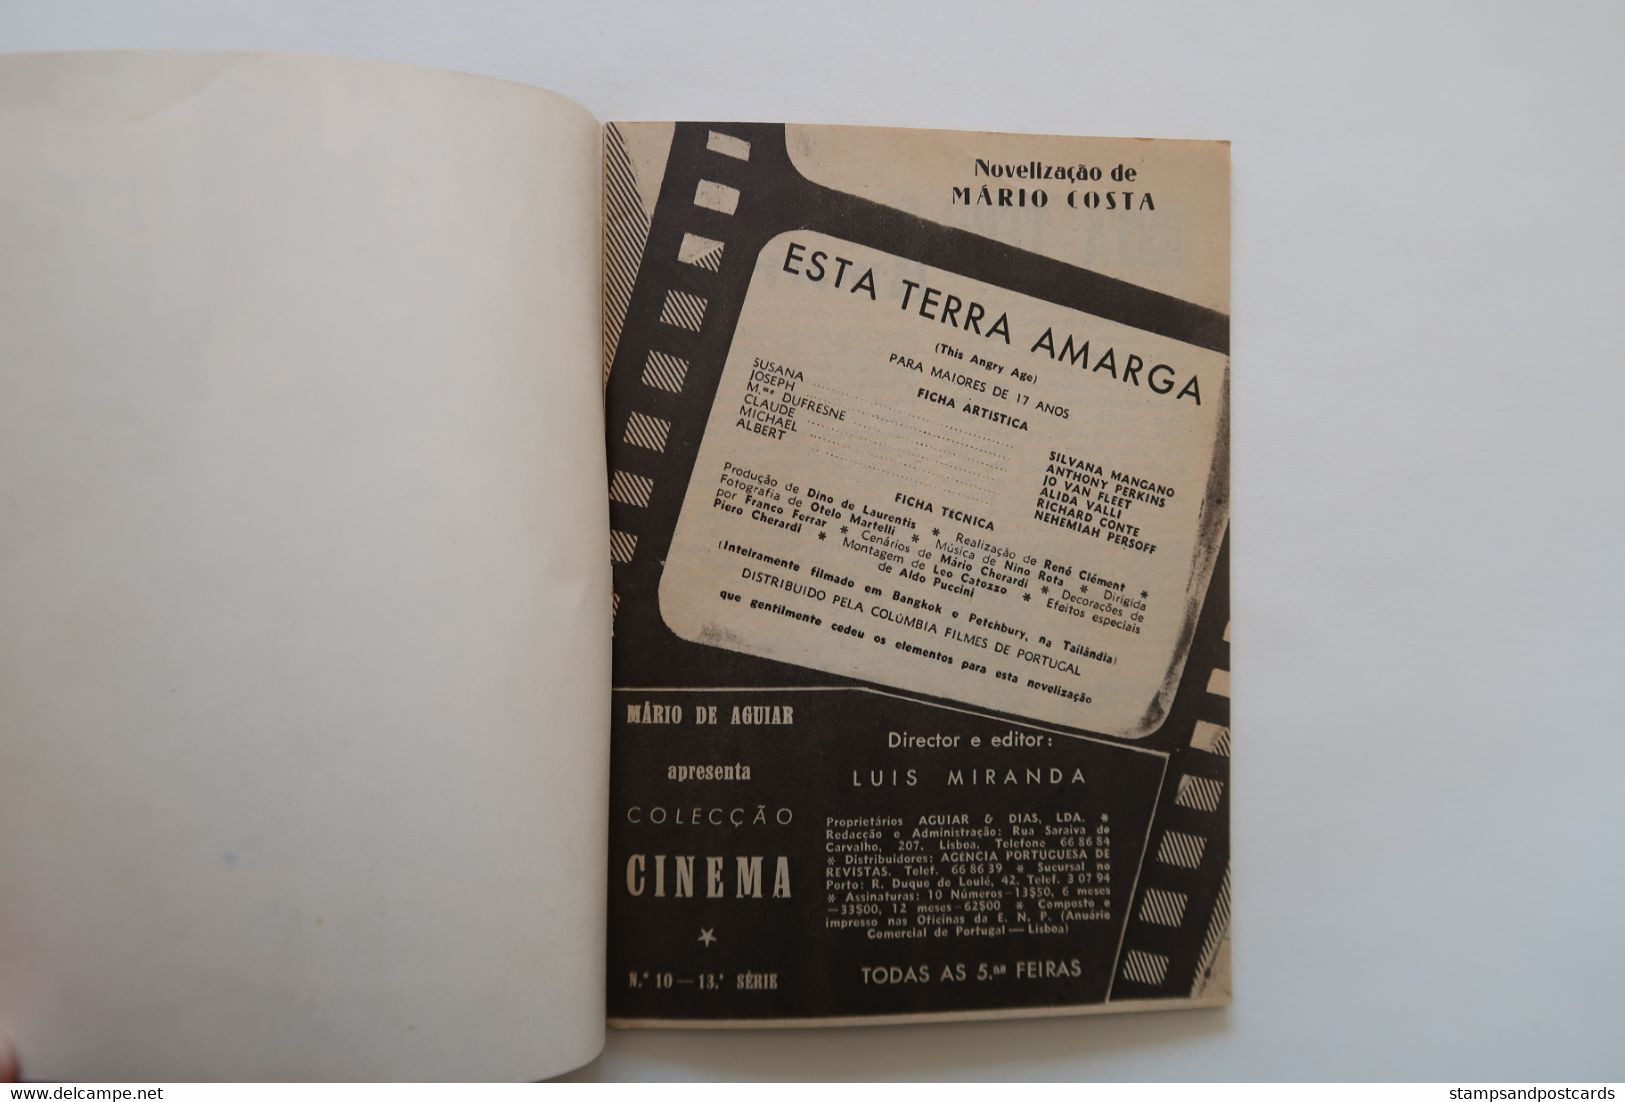 Portugal Revue Cinéma Movies Mag 1957 This Angry Age Silvana Mangano Anthony Perkins Dir. René Clément Pierre Vaneck - Cinéma & Télévision